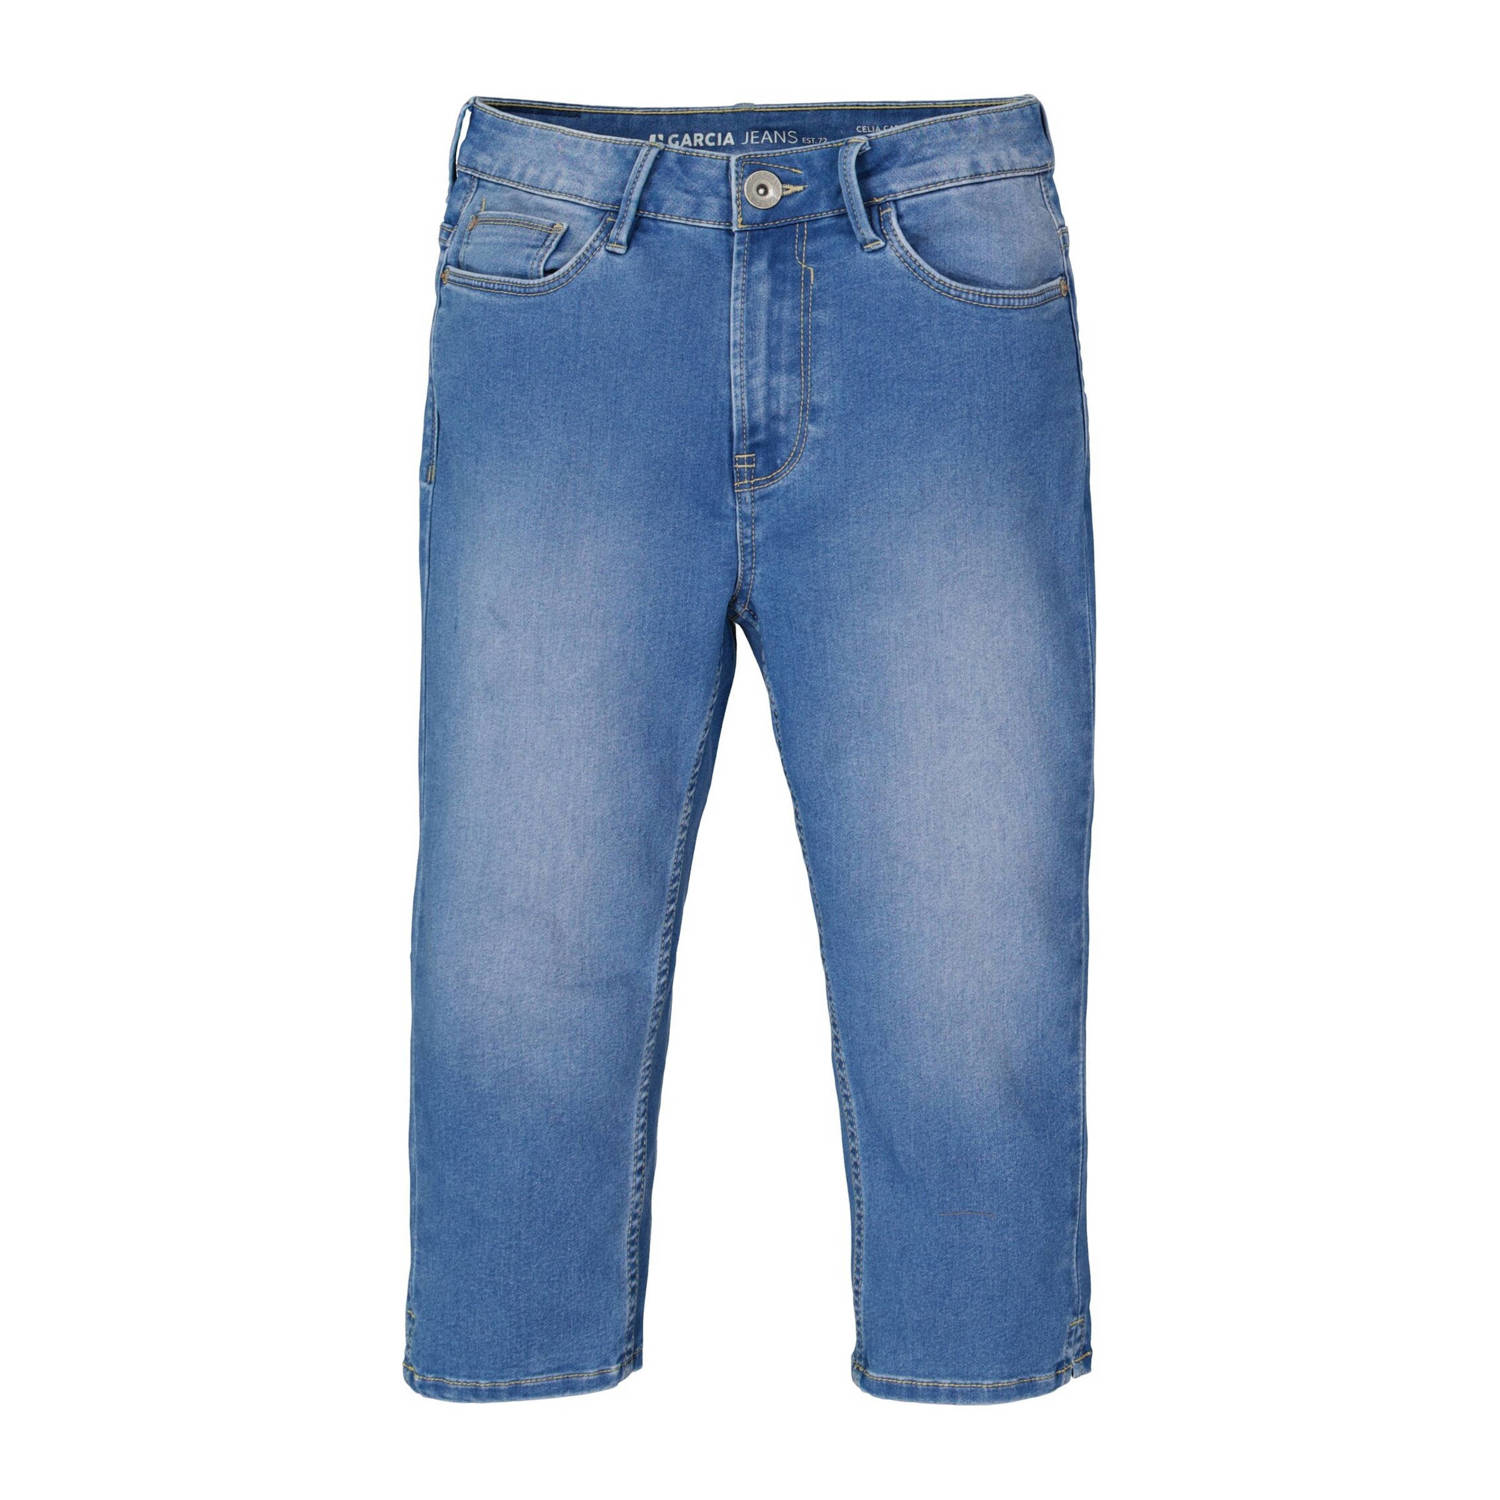 Garcia capri jeans light blue denim